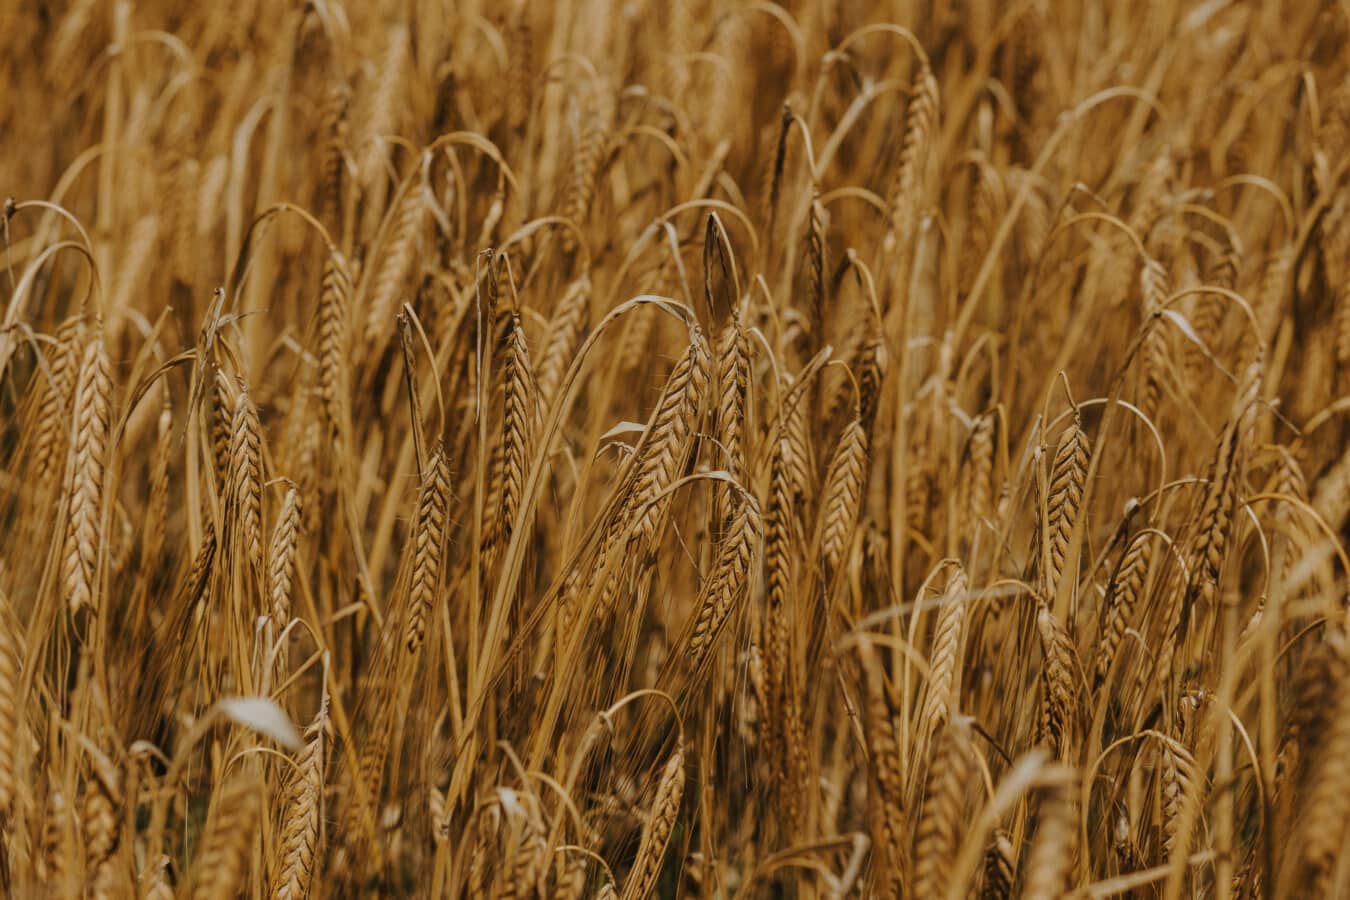 златисто сияние, wheatfield, пшеница, зърно, семе, слама, зърнени култури, сух сезон, равно поле, селски